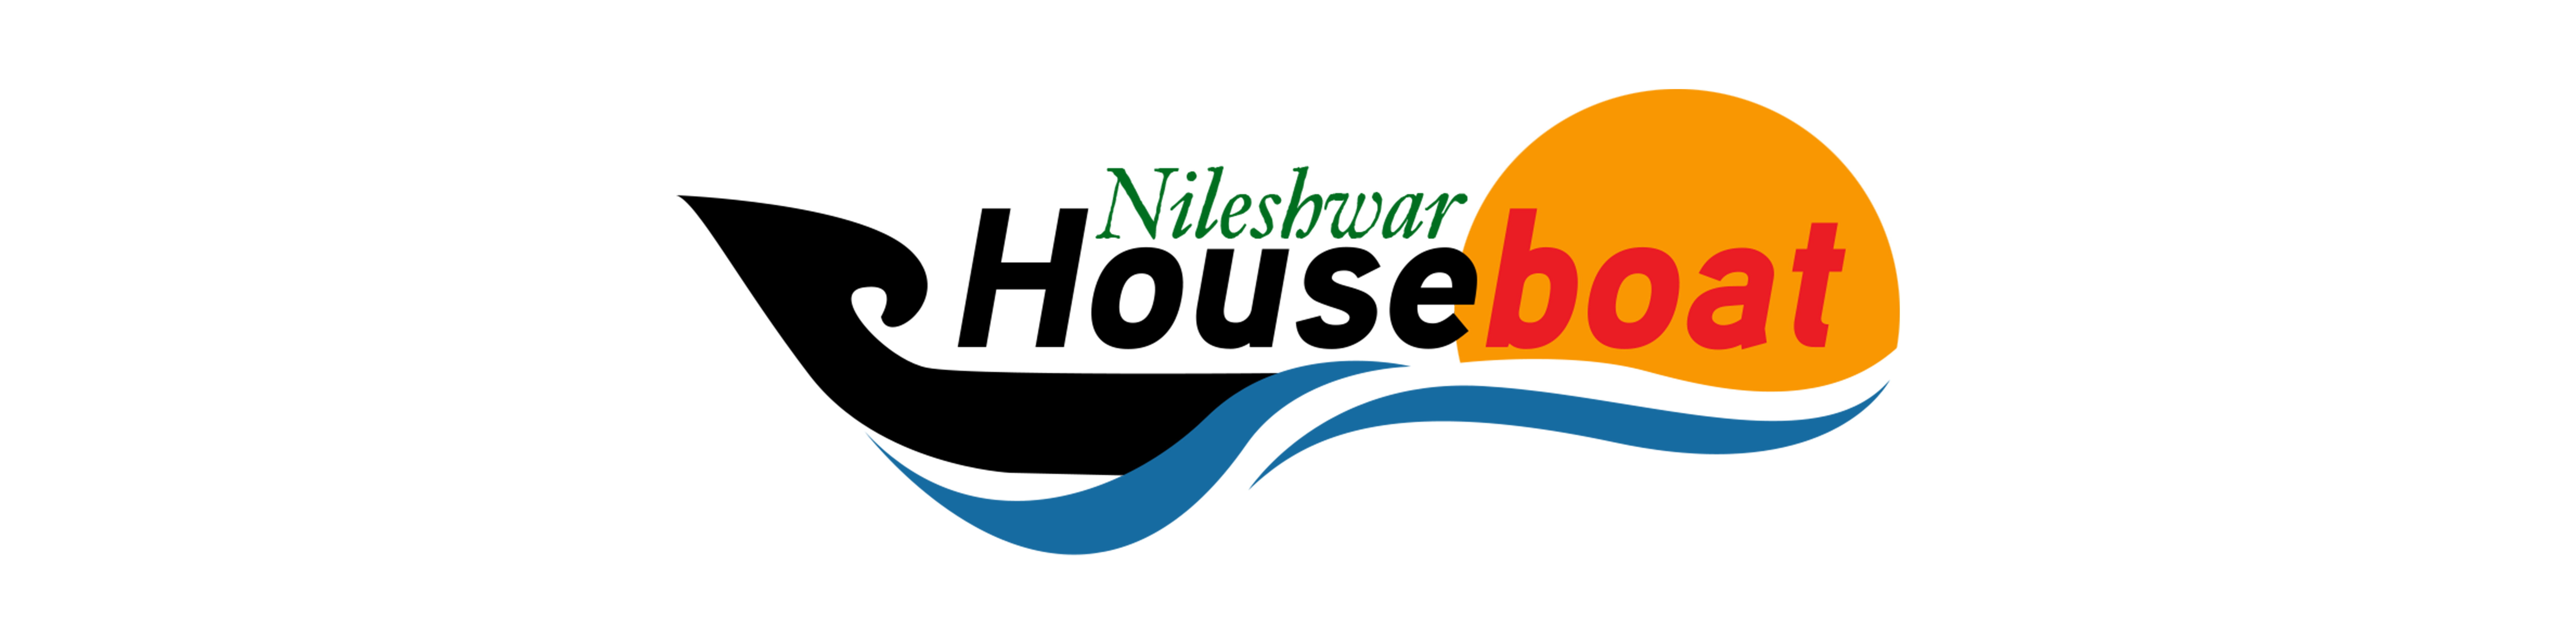 Kerala Bekal Nileshwar Boat House Booking Online - Nileshwar Houseboat (official website)